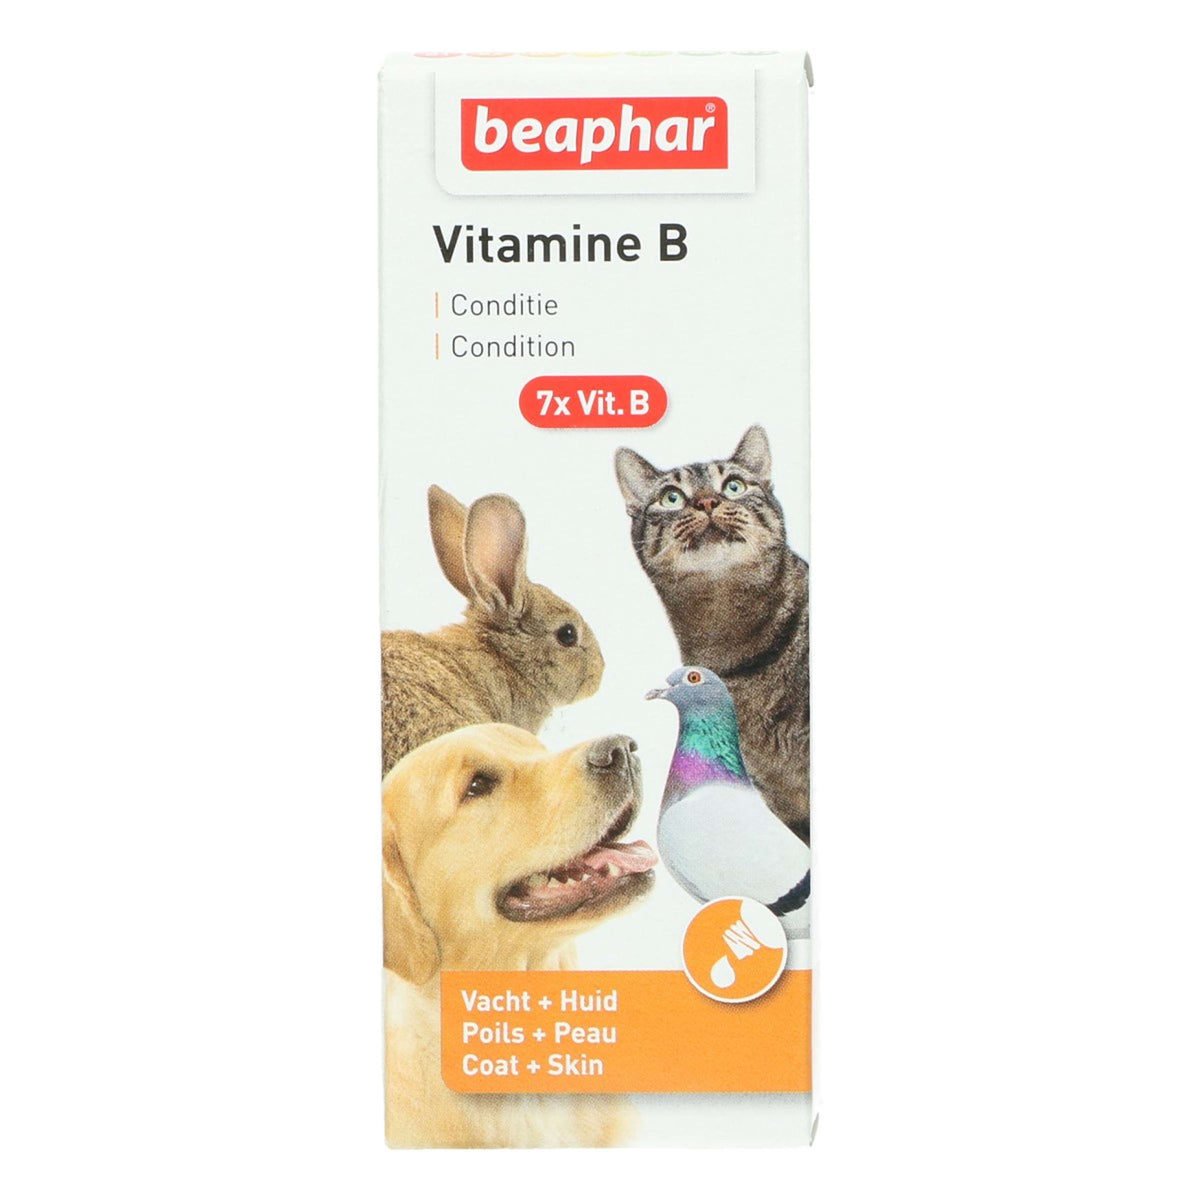 Beaphar Vitamin B Complex